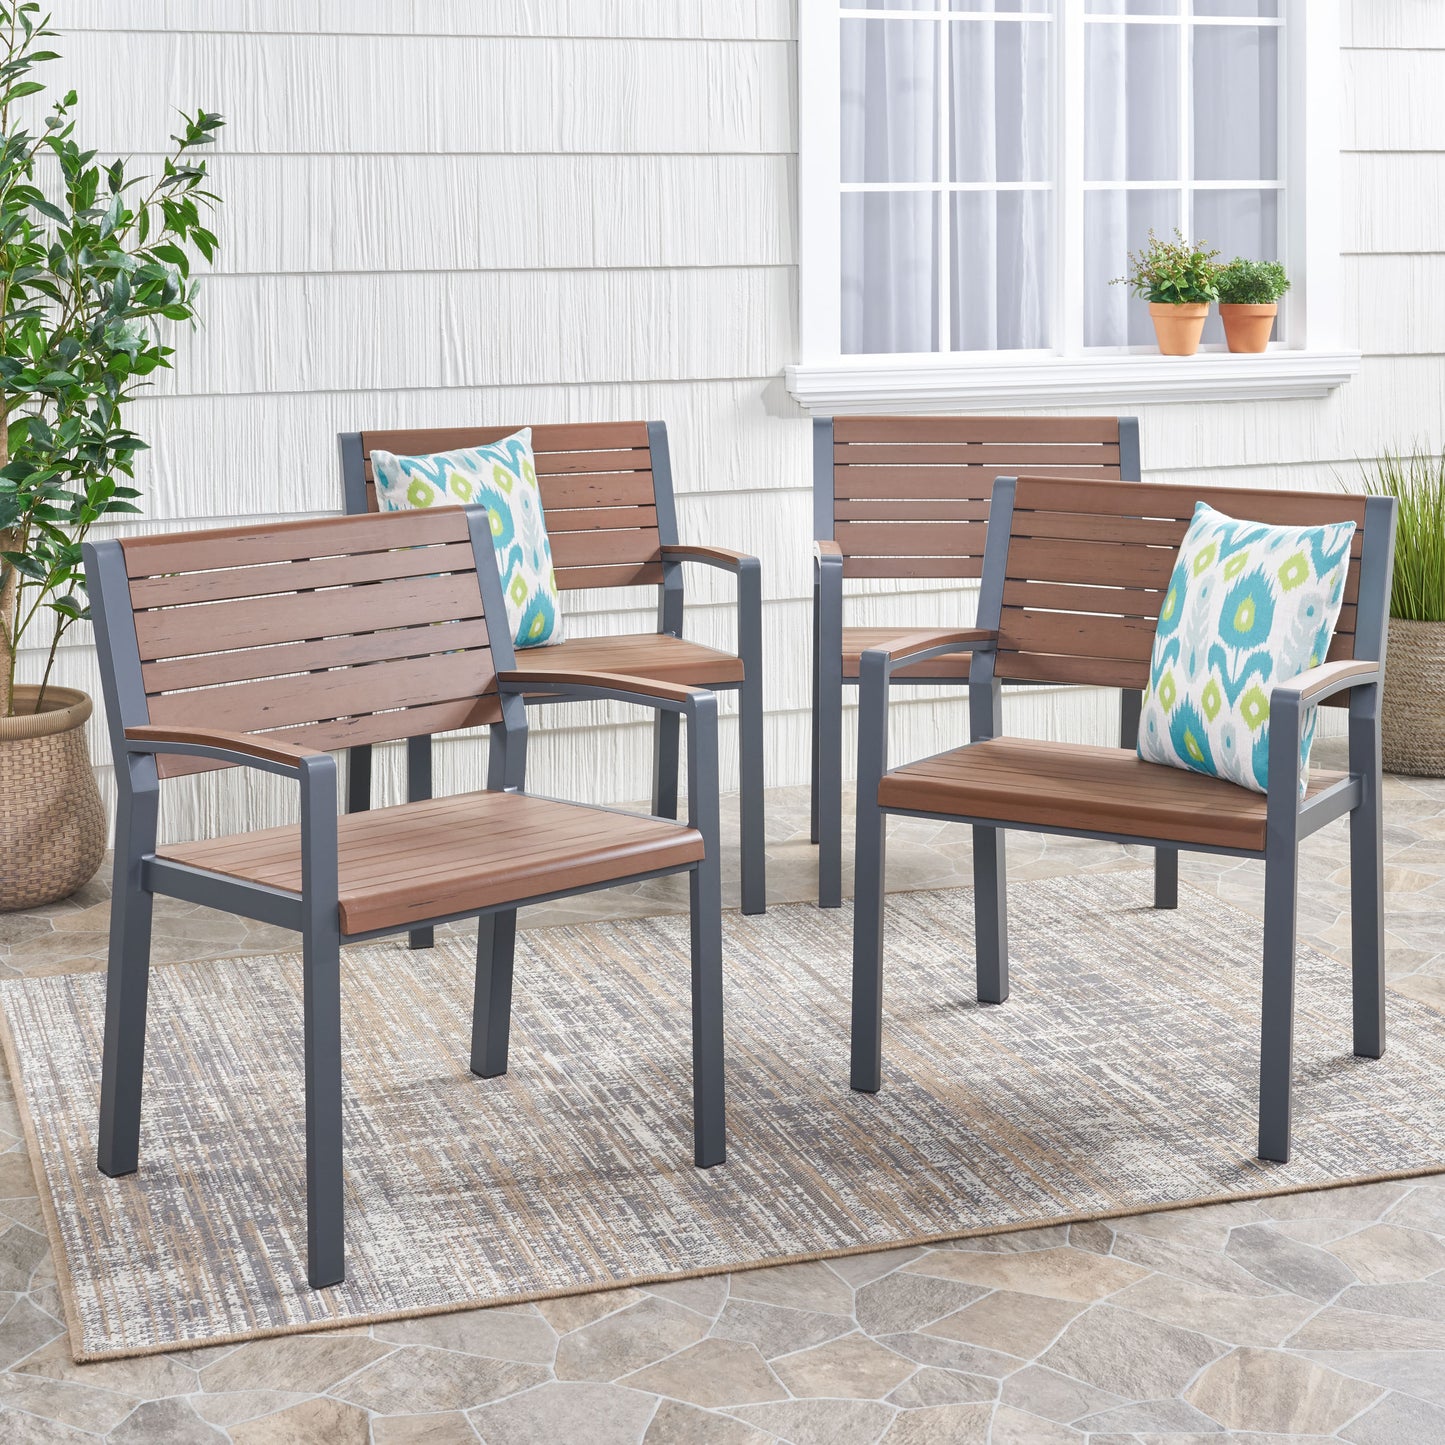 Trimble Outdoor Aluminum Chairs, Set of 4